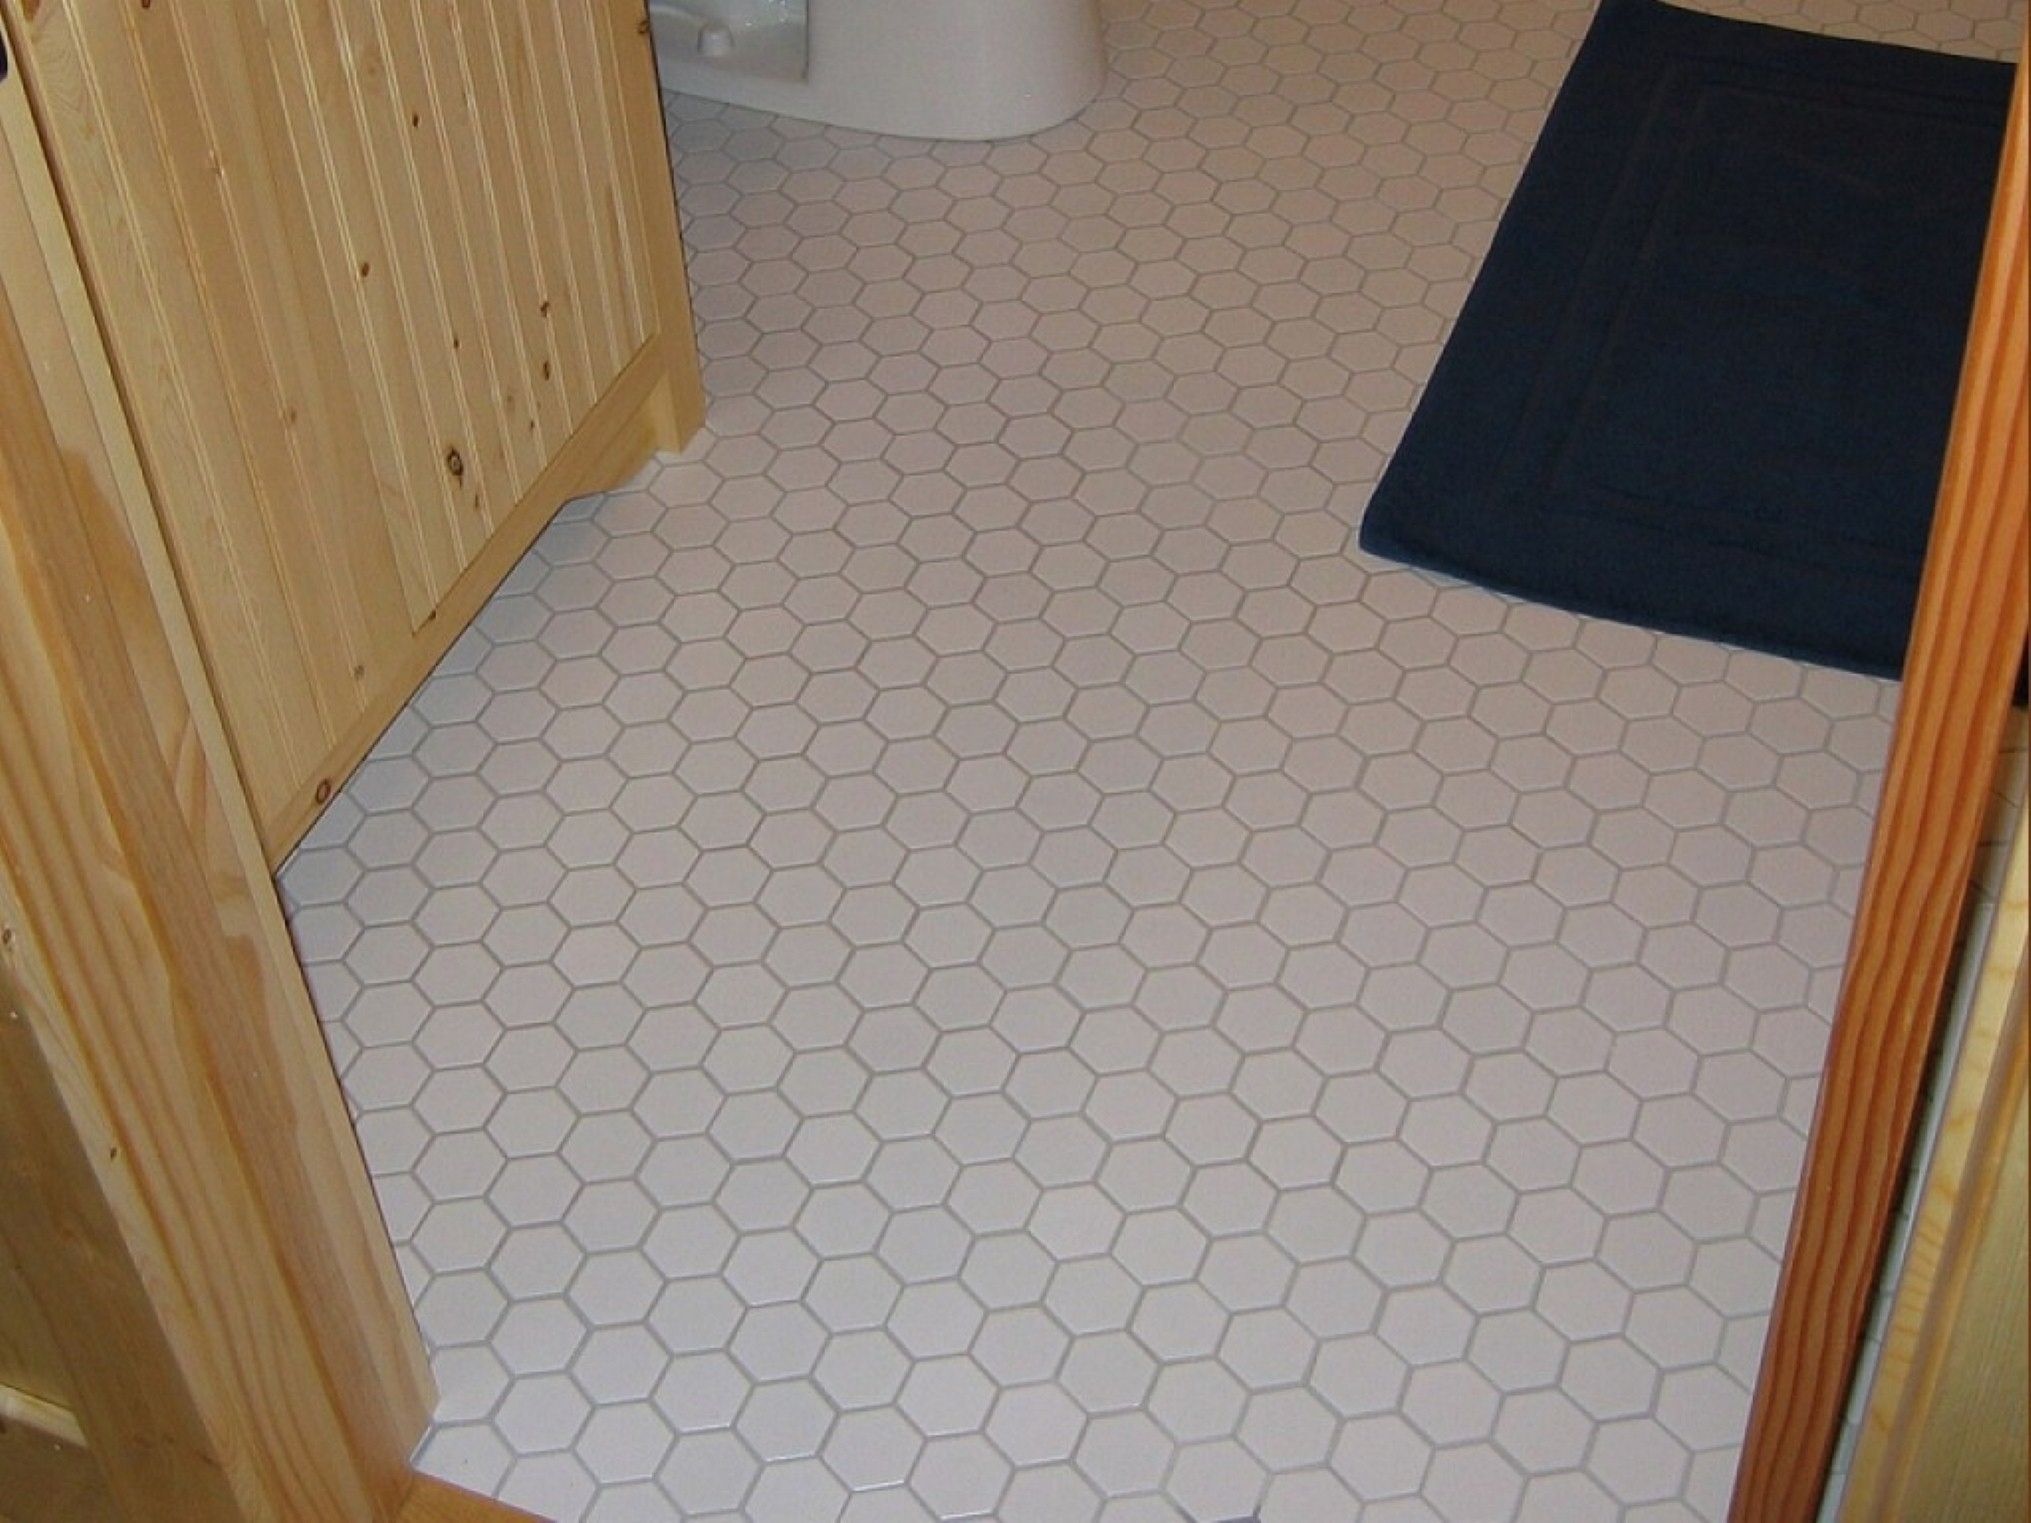 Smart Bathroom Floor Tiles With Added Design Bathroom And Fair To Various Settings Layout Of The Room Bathroom Fair (View 28 of 29)